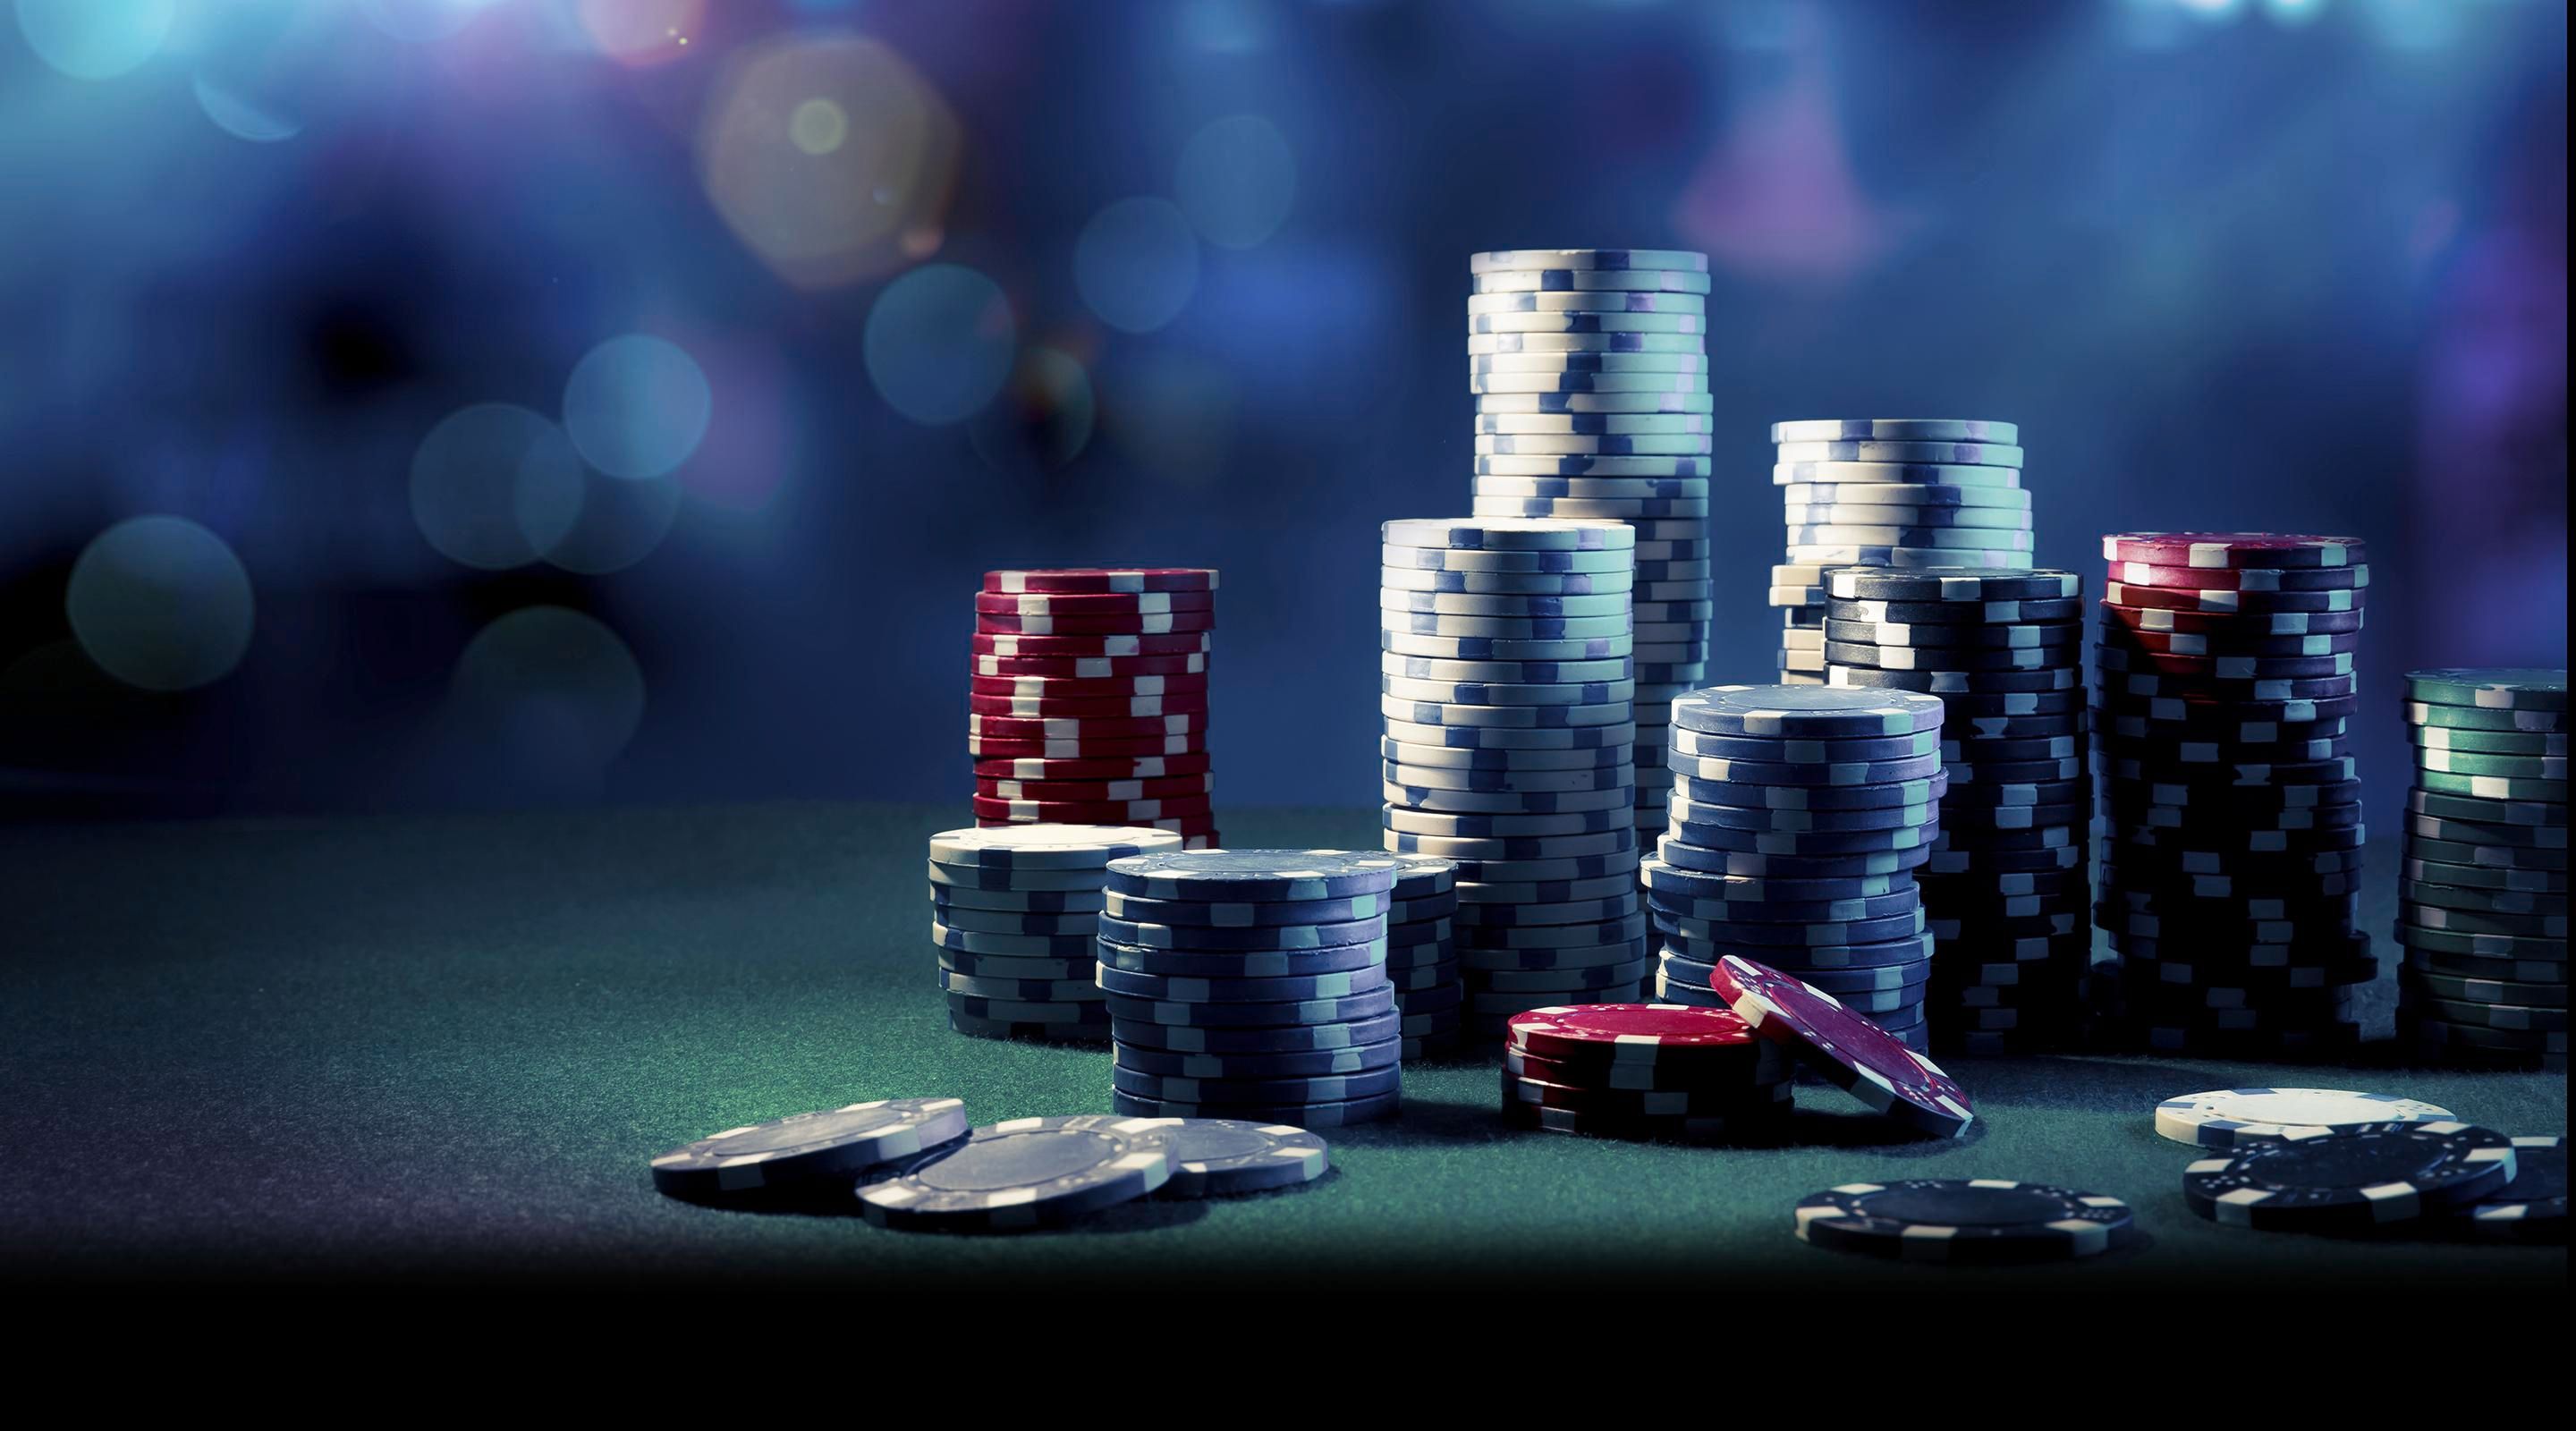 excalibur-casino-poker-chips.tif.jpg